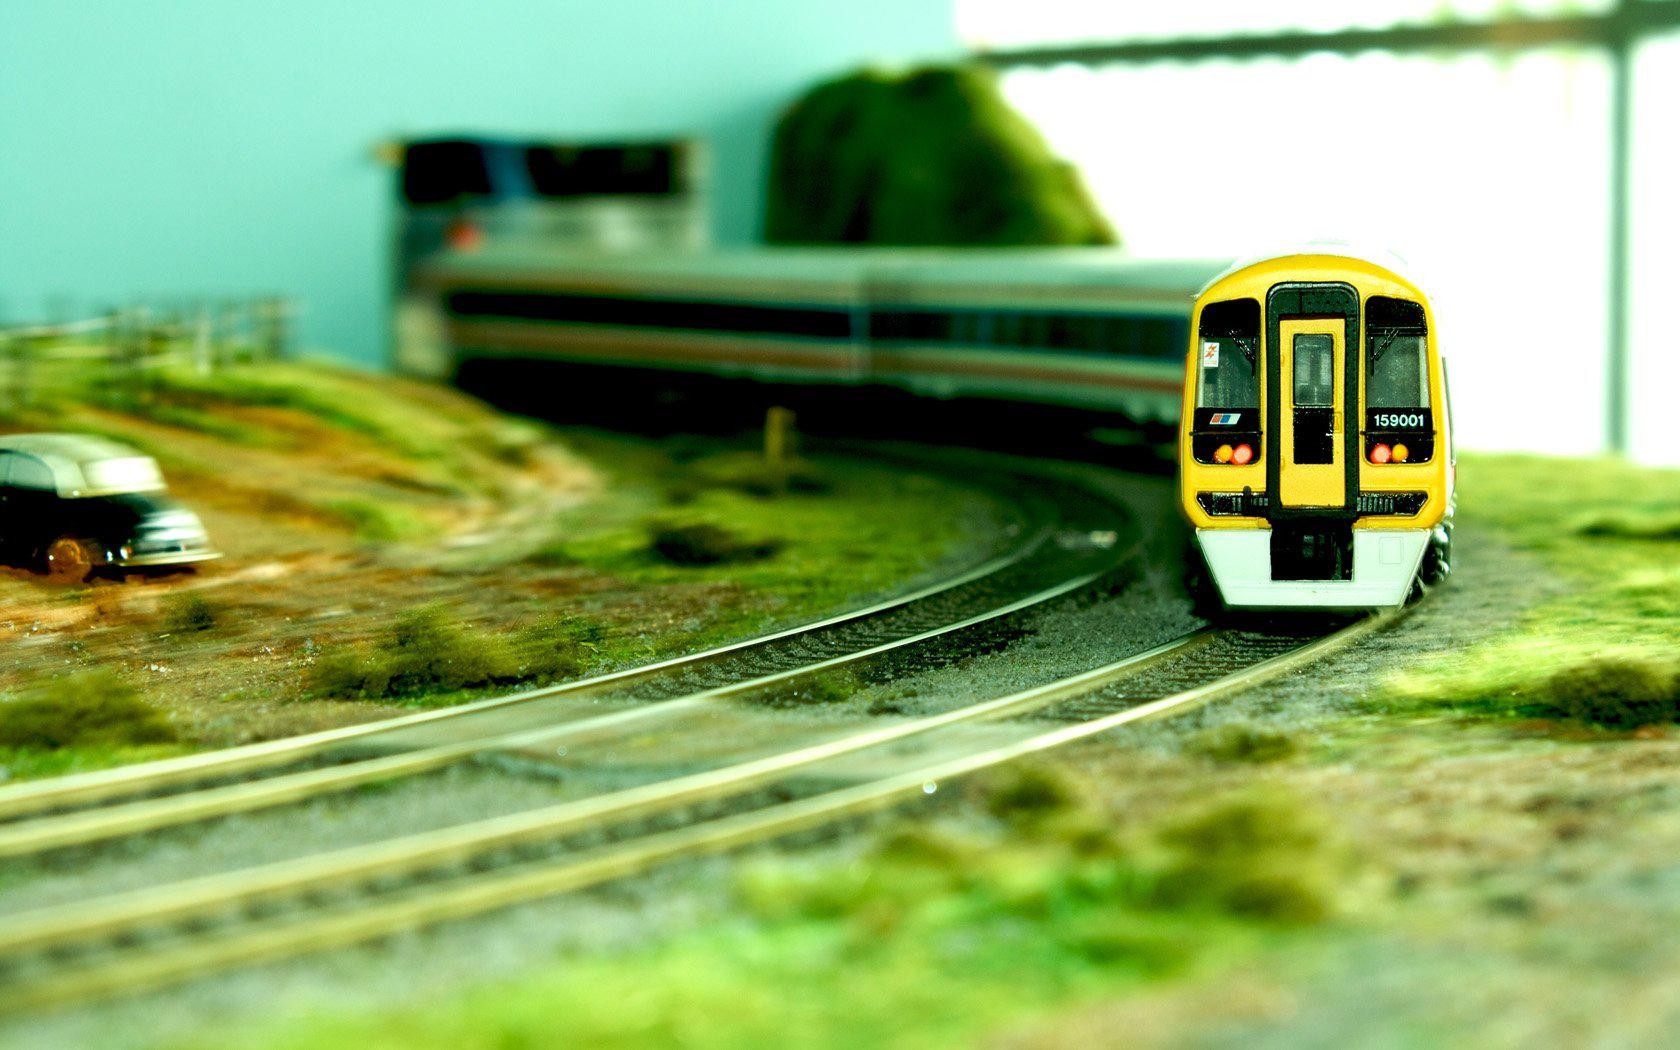 General 1680x1050 train railway tilt shift old car toys miniatures depth of field vehicle